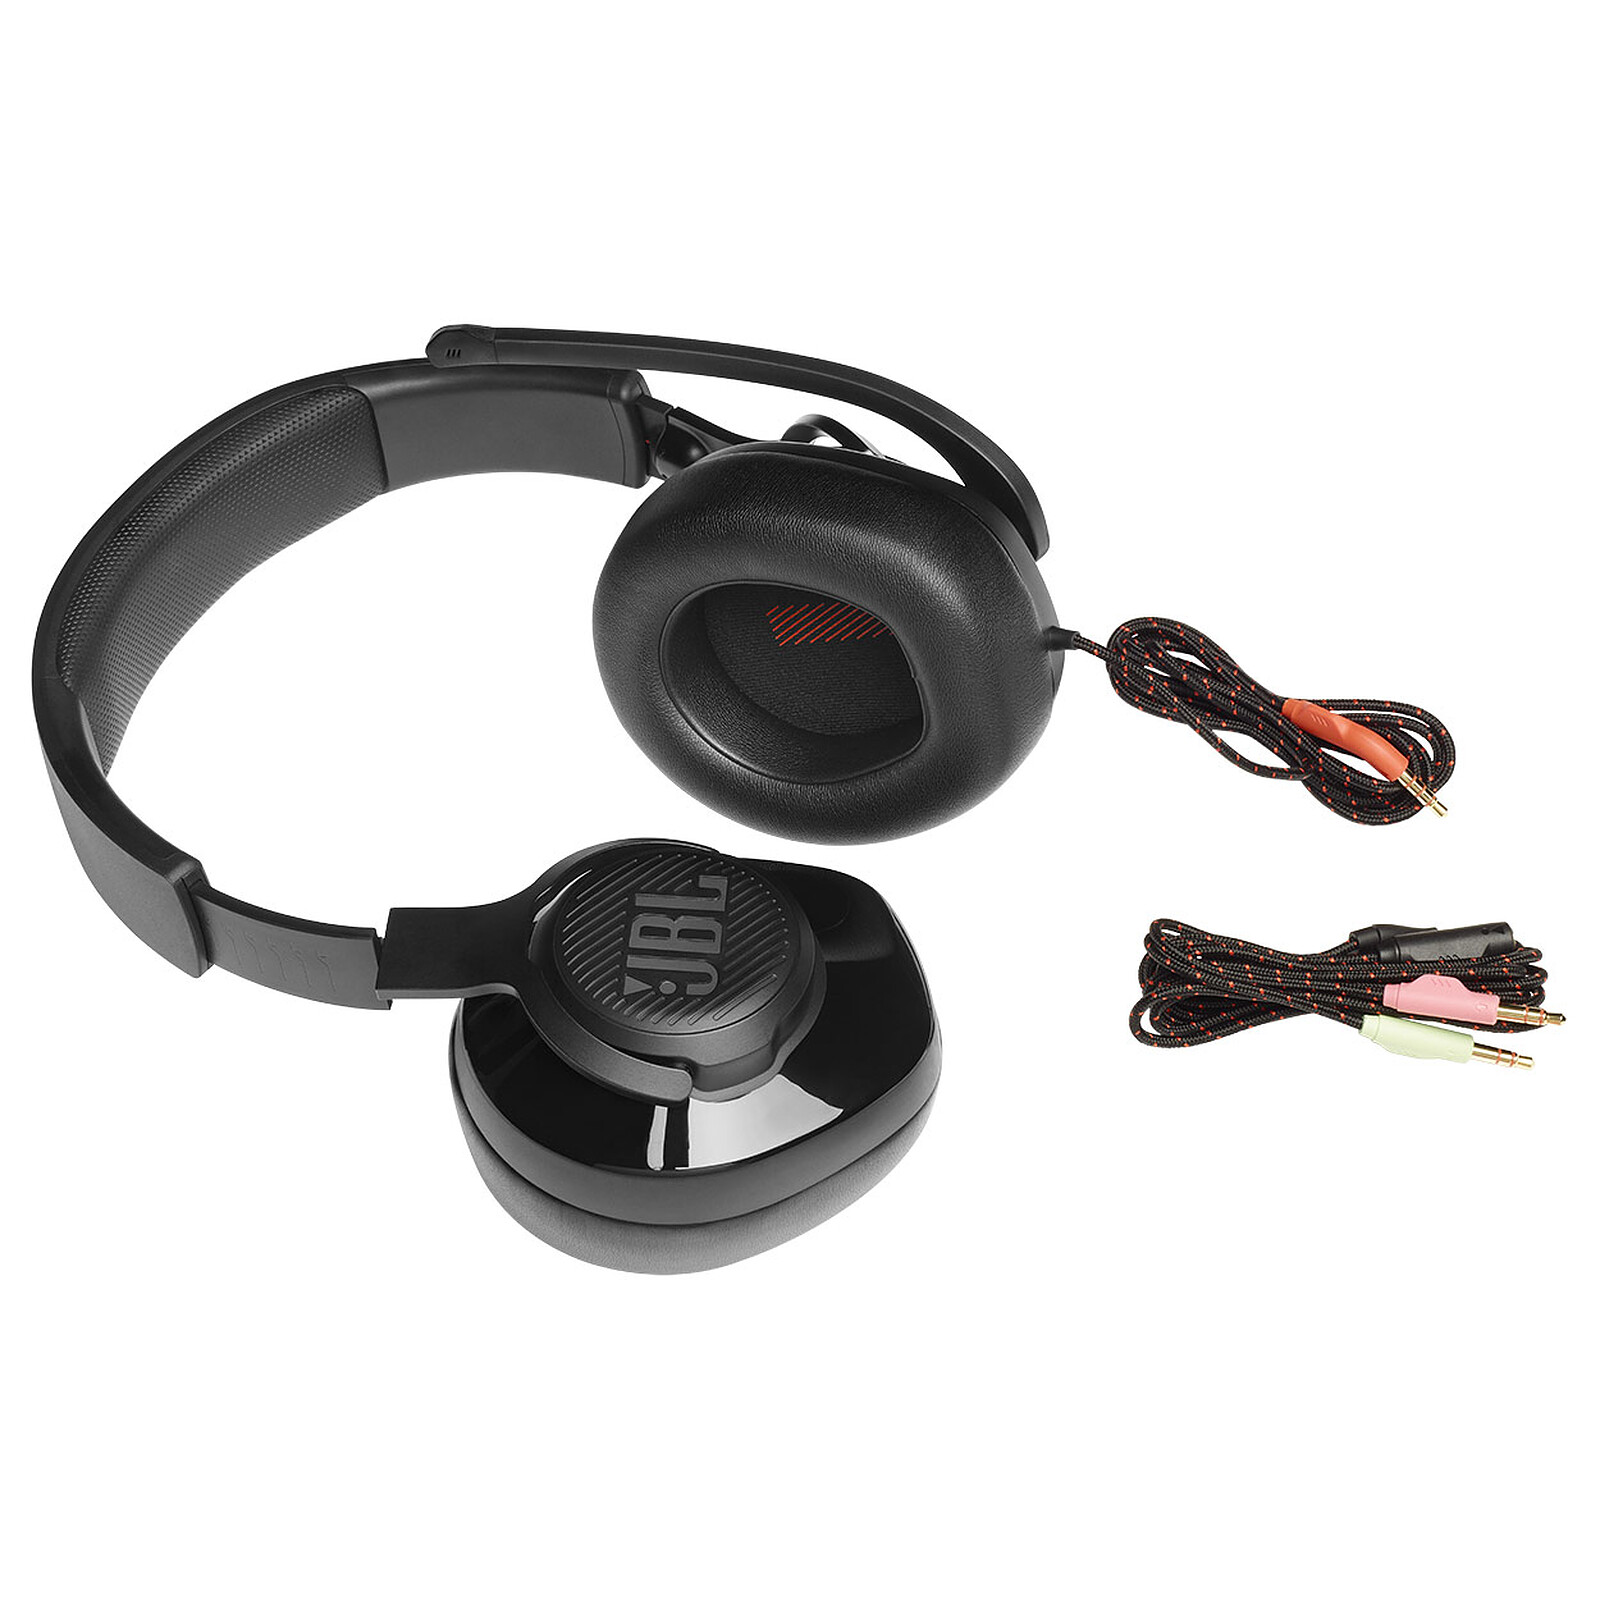 Headset gaming JBL Quantum 100 Negro/Verde - Auriculares para consola - Los  mejores precios